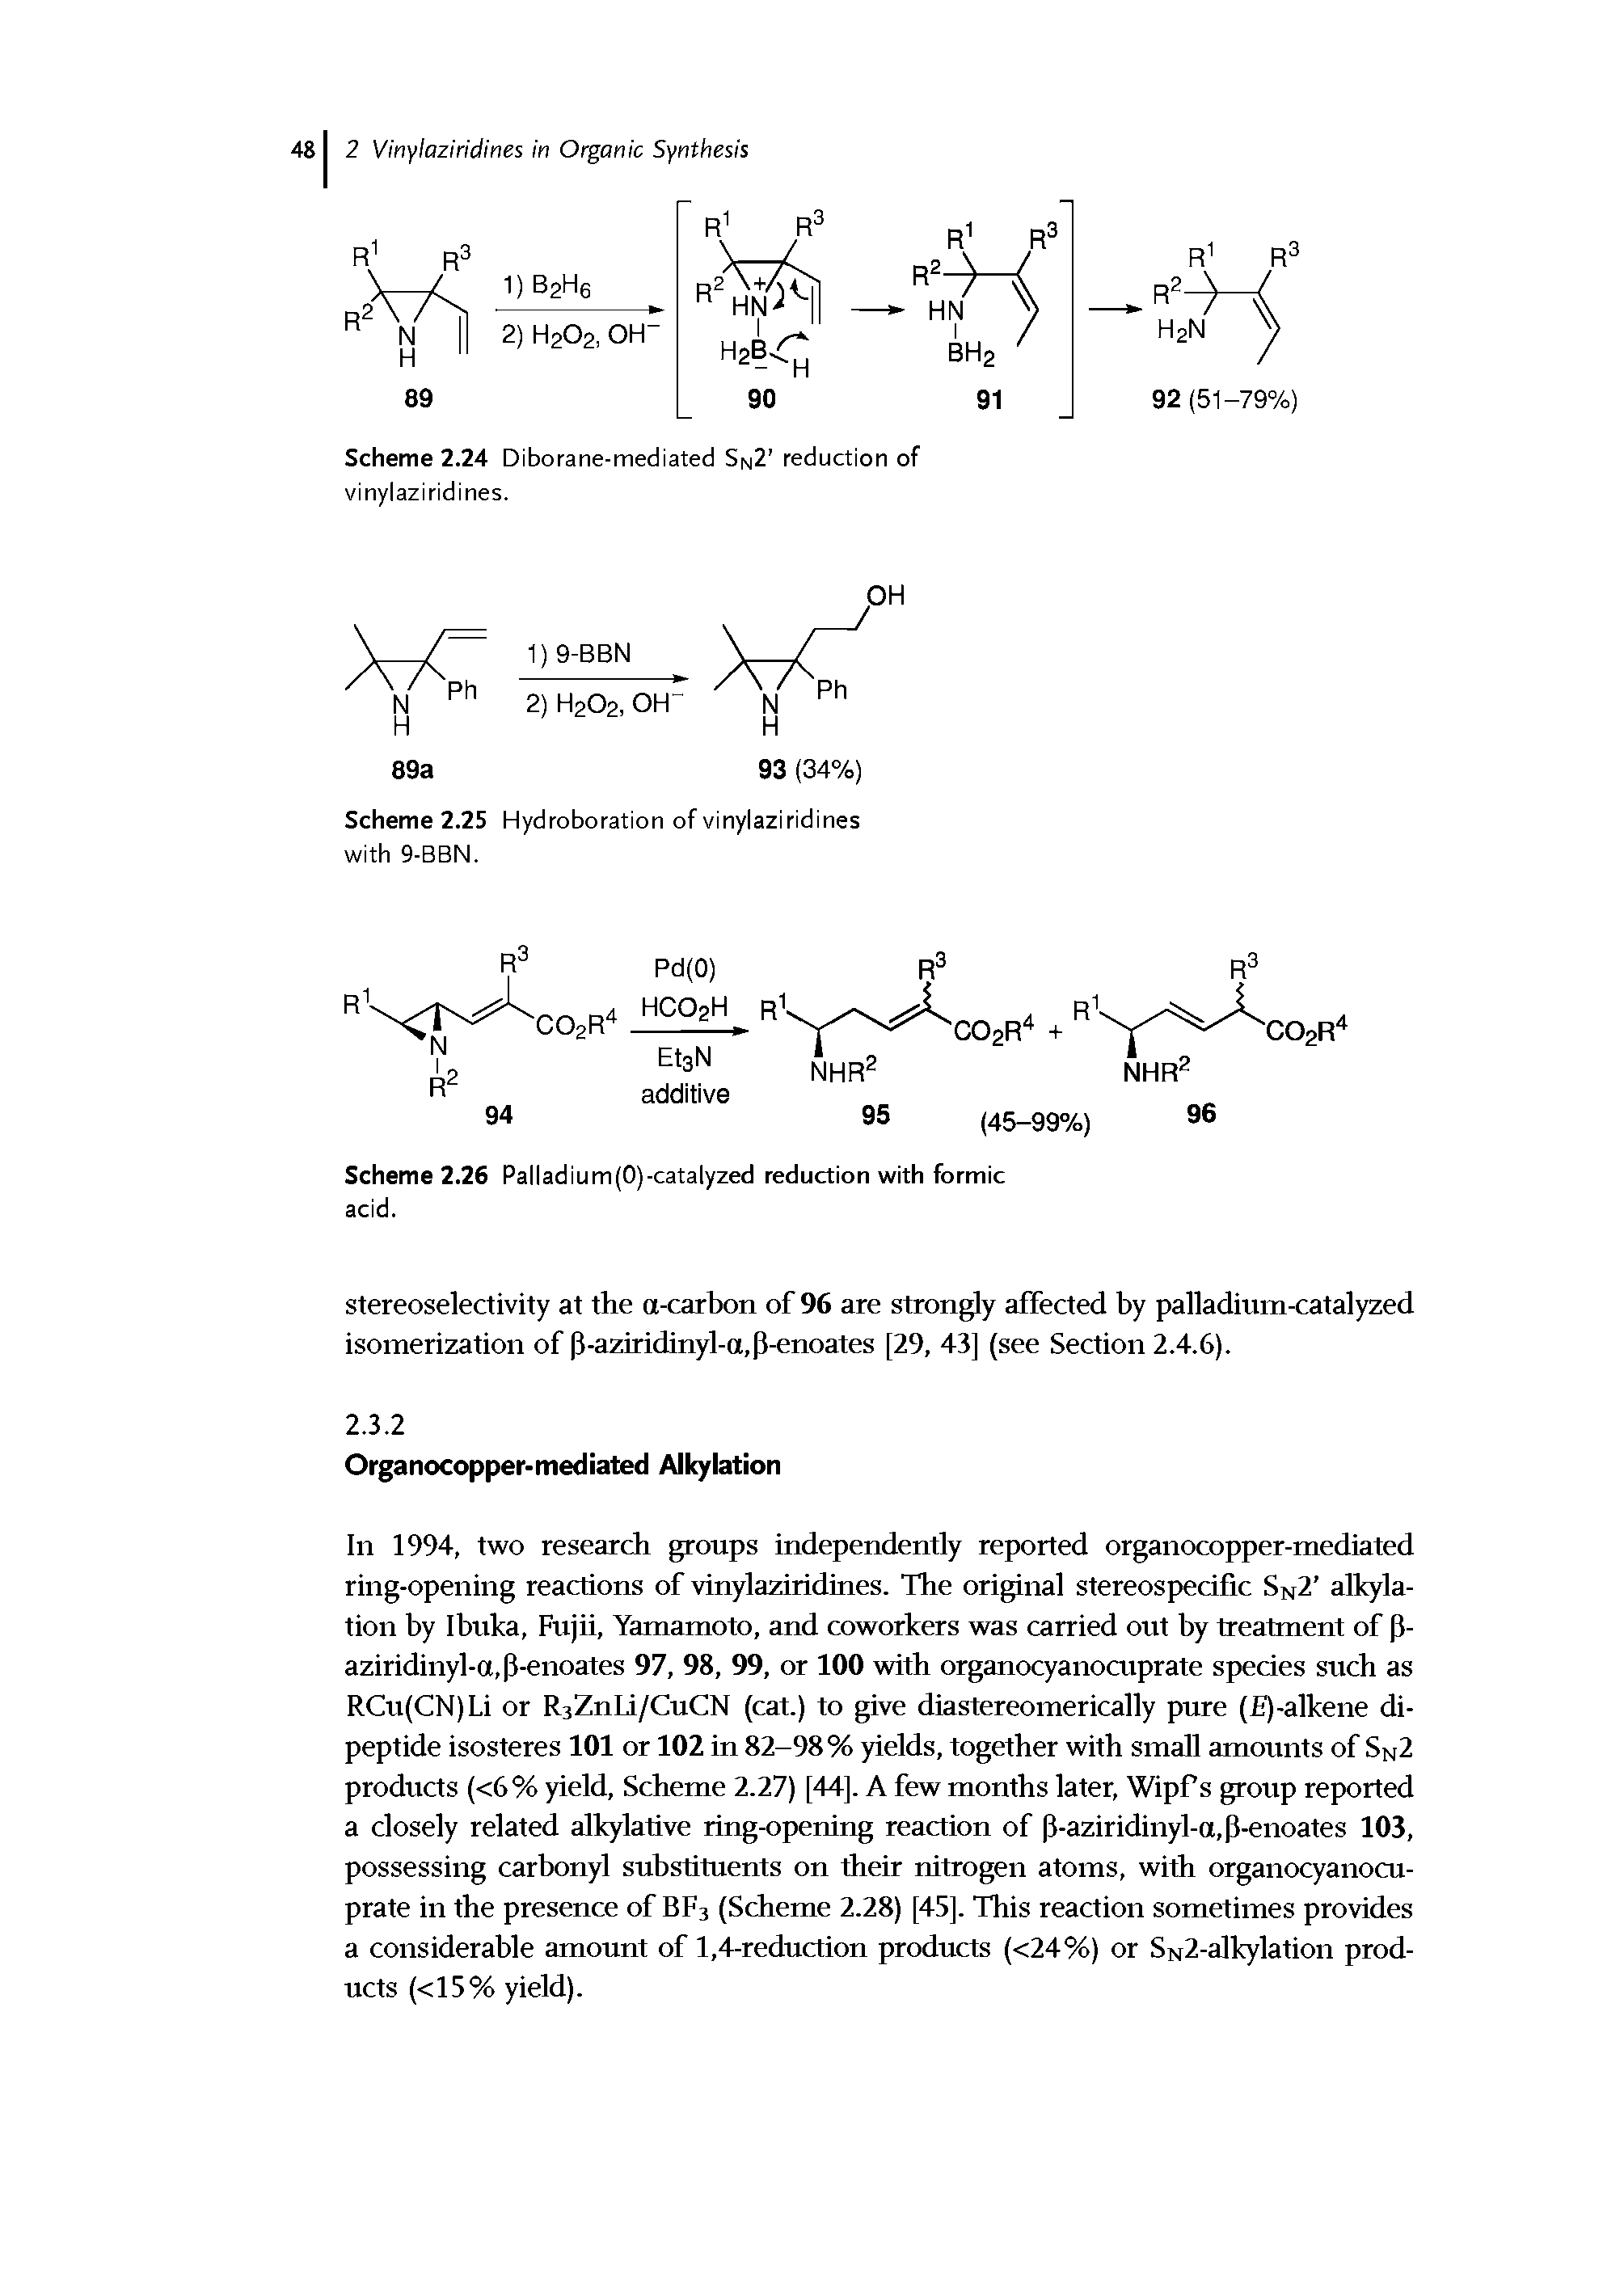 Scheme 2.26 Palladium(0)-catalyzed reduction with formic acid.